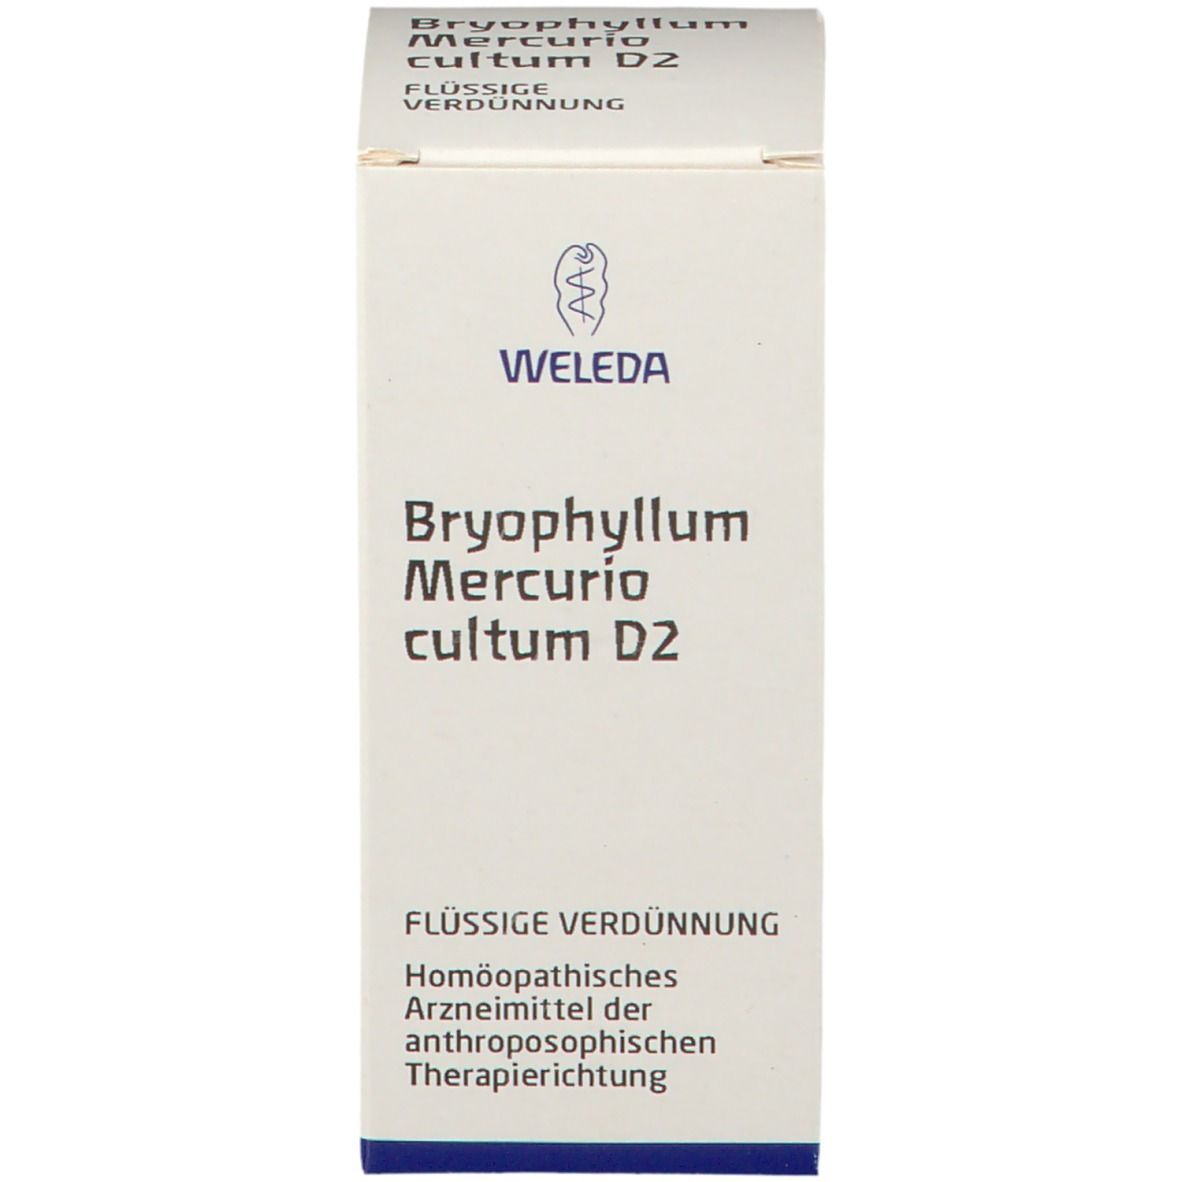 Weleda Bryophyllum Mercurio cultum D2 Dilution